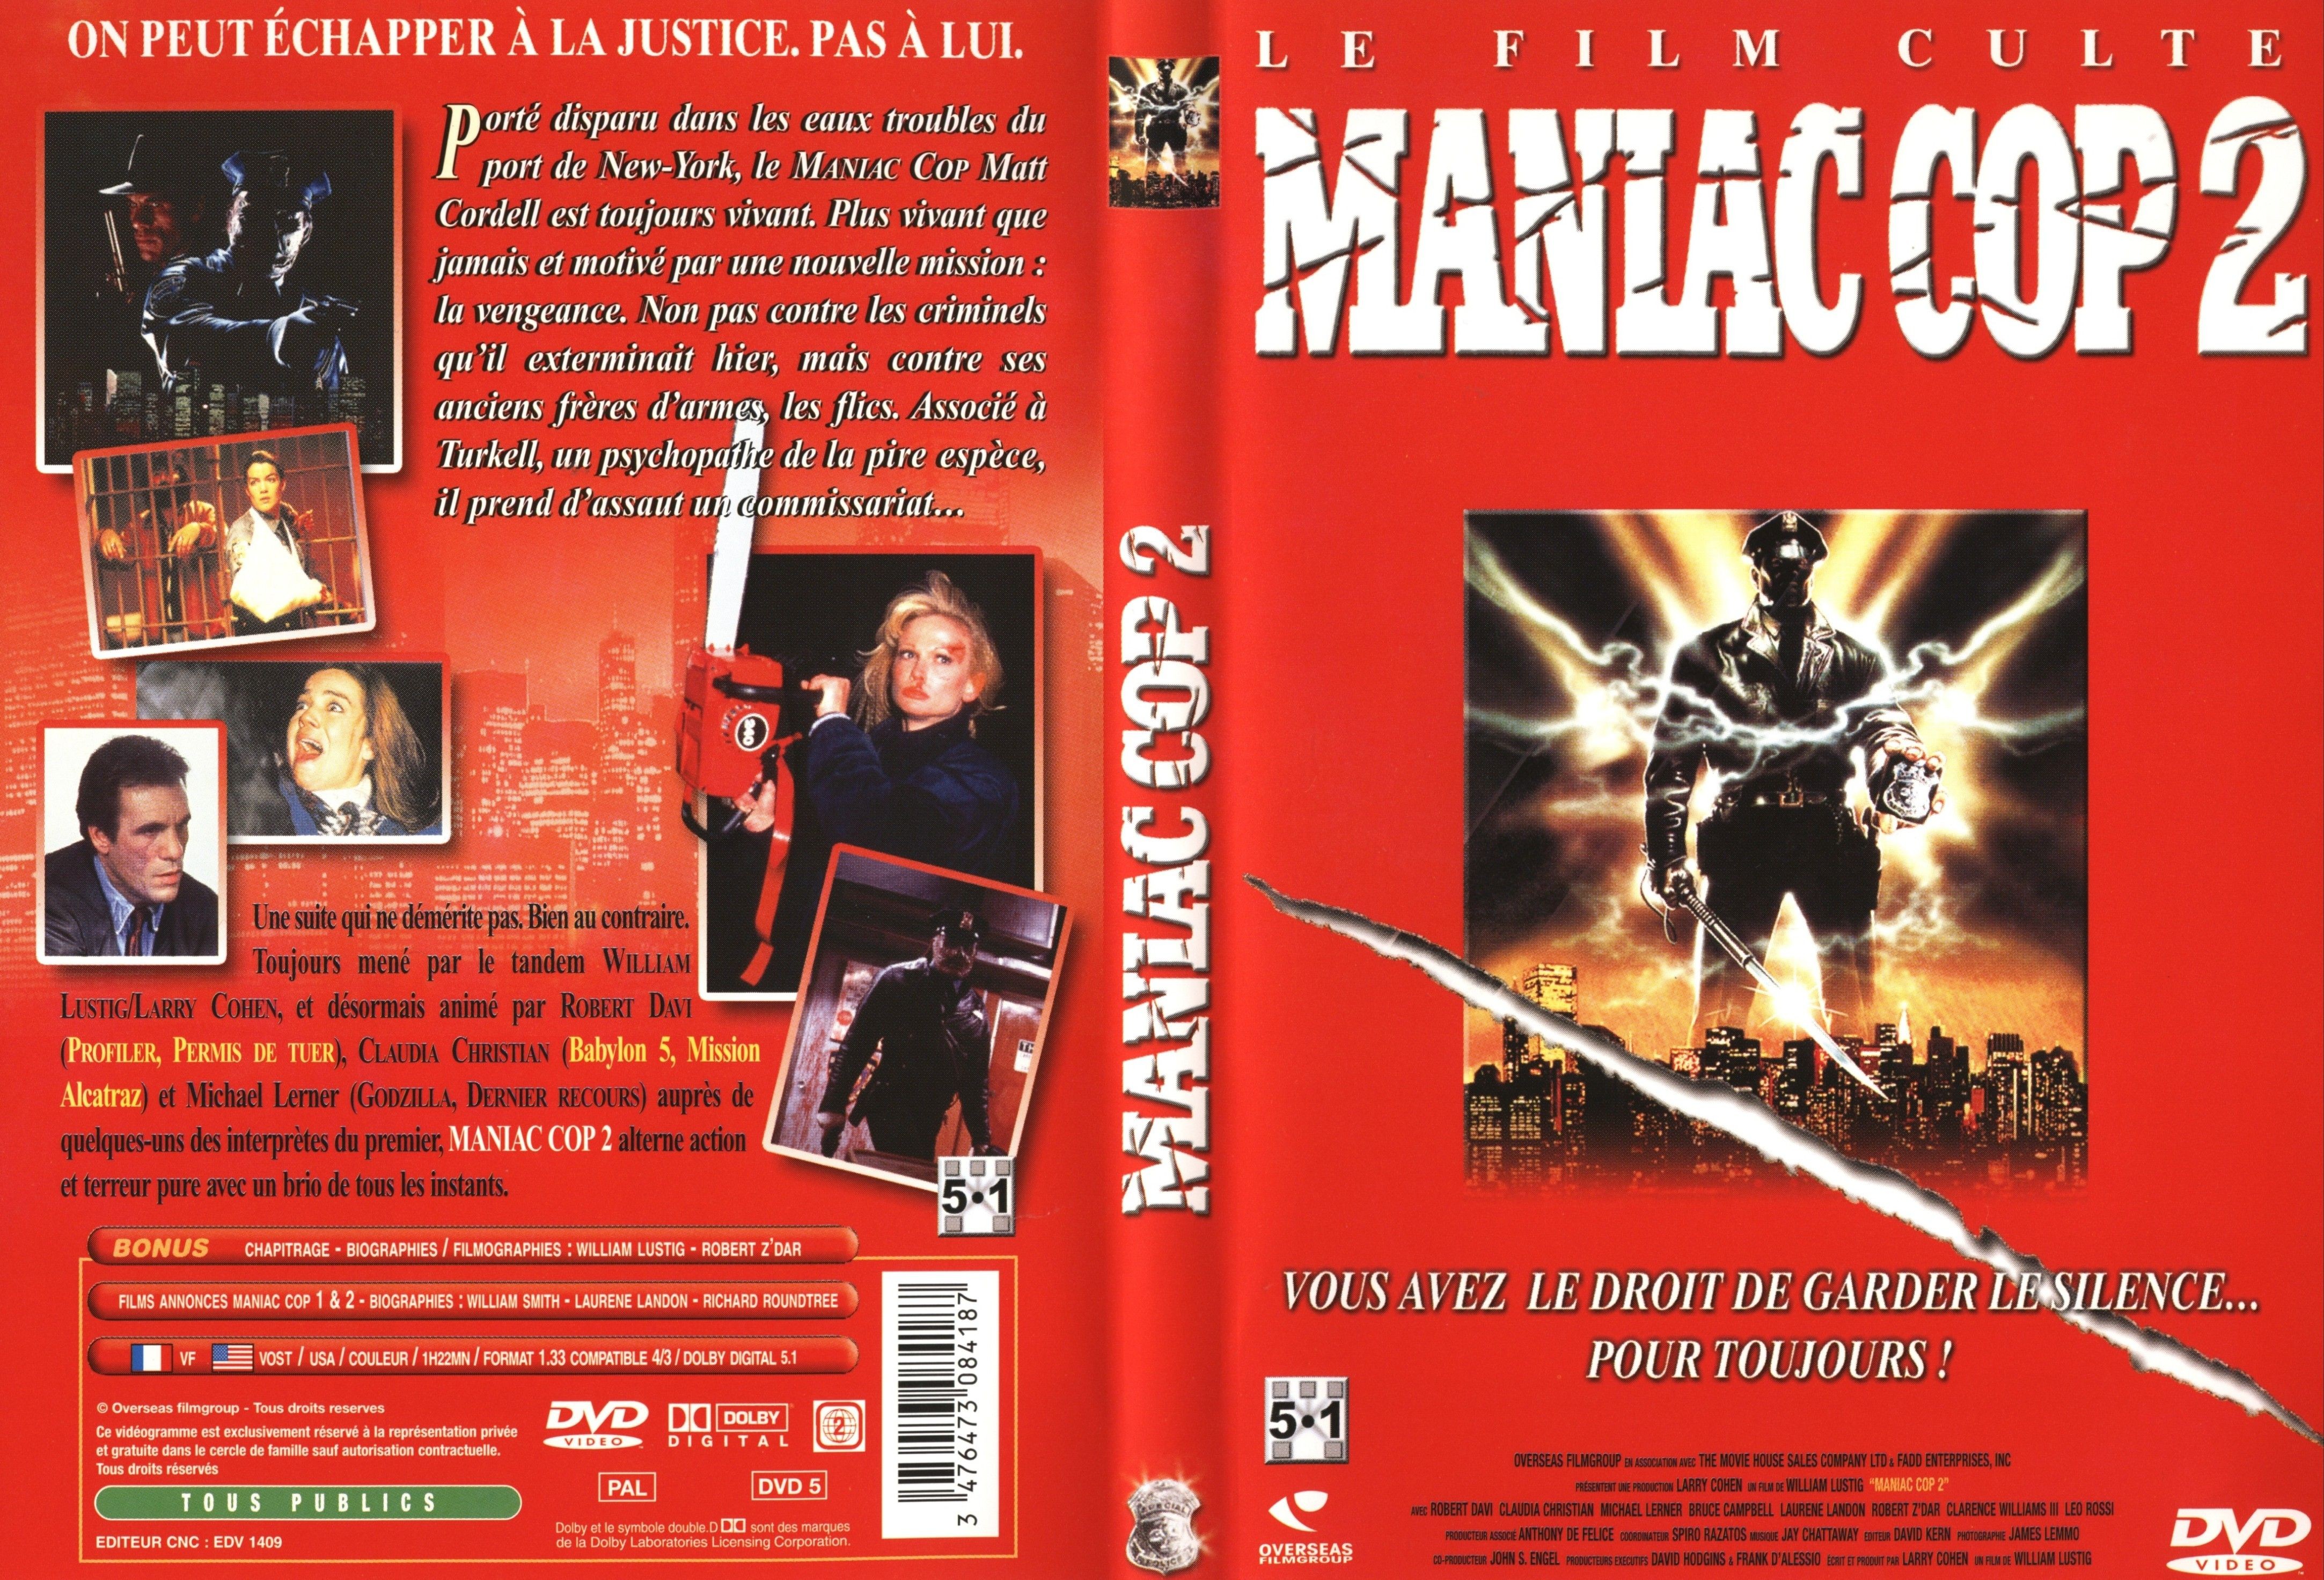 Jaquette DVD Maniac cop 2